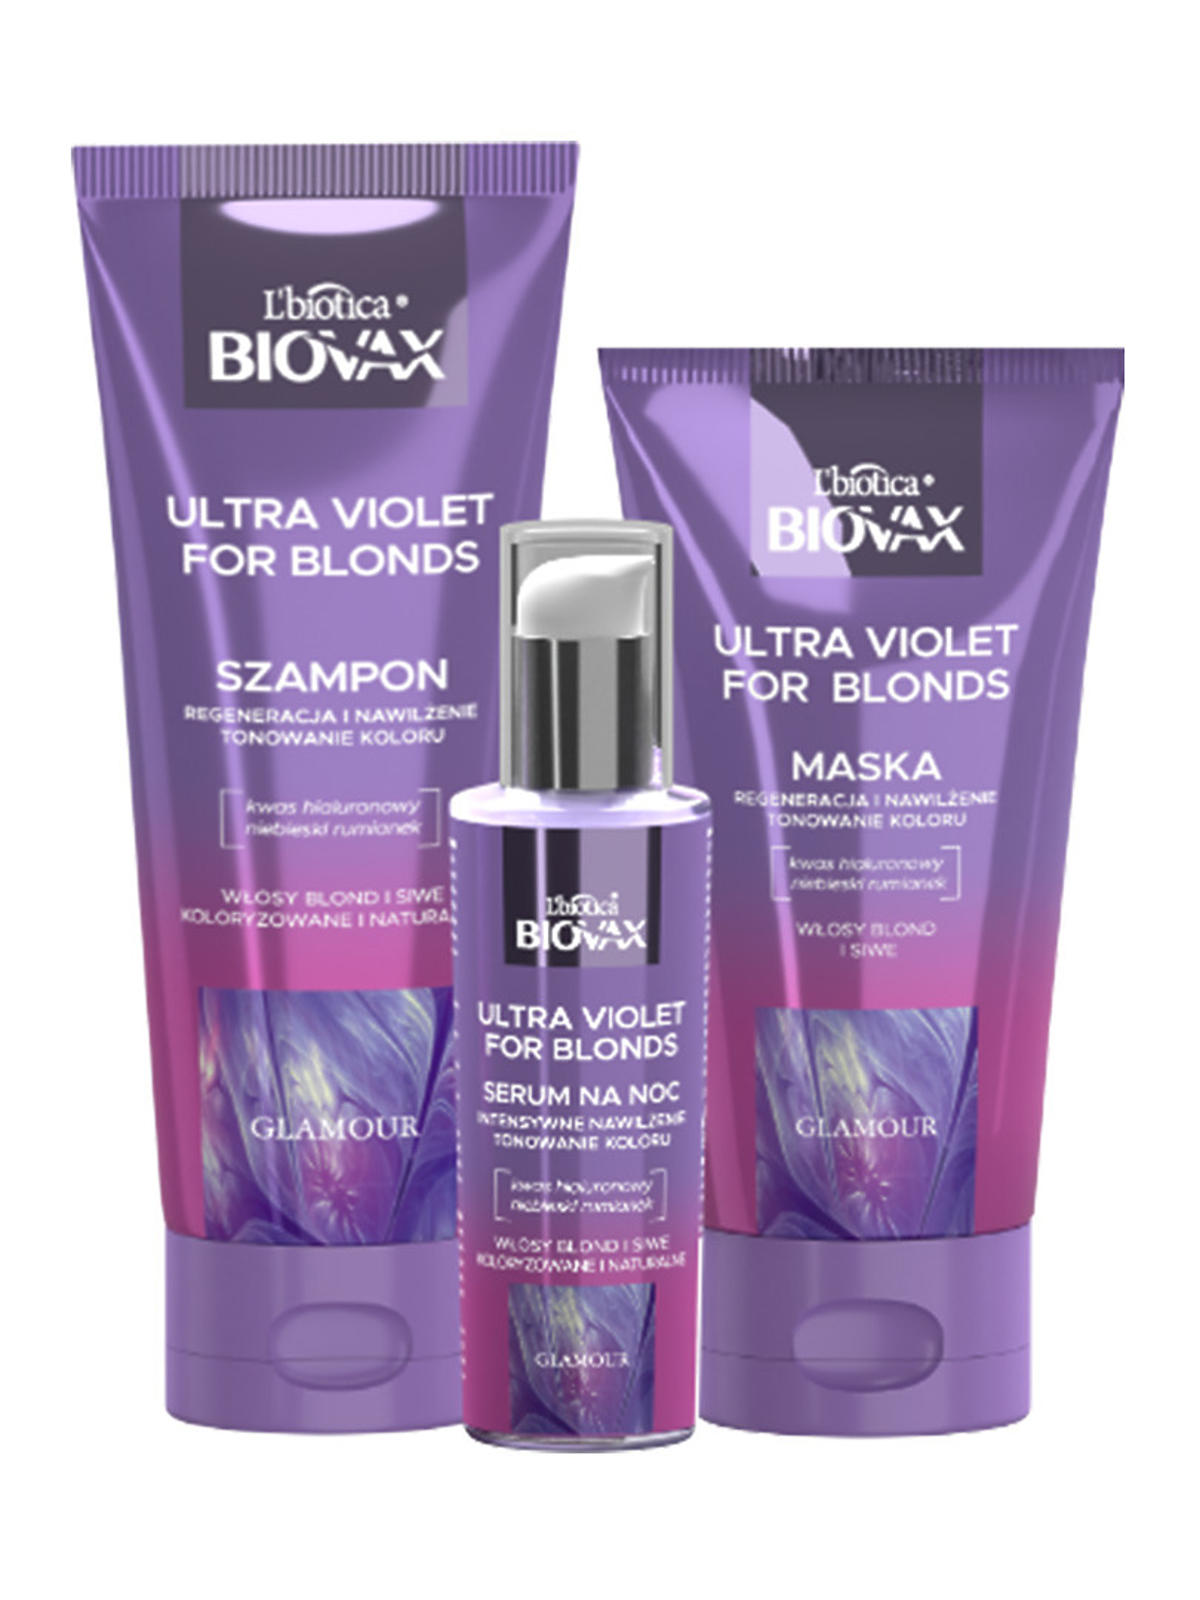 L'BIOTICA BIOVAX Glamour Ultra Violet for Blonds